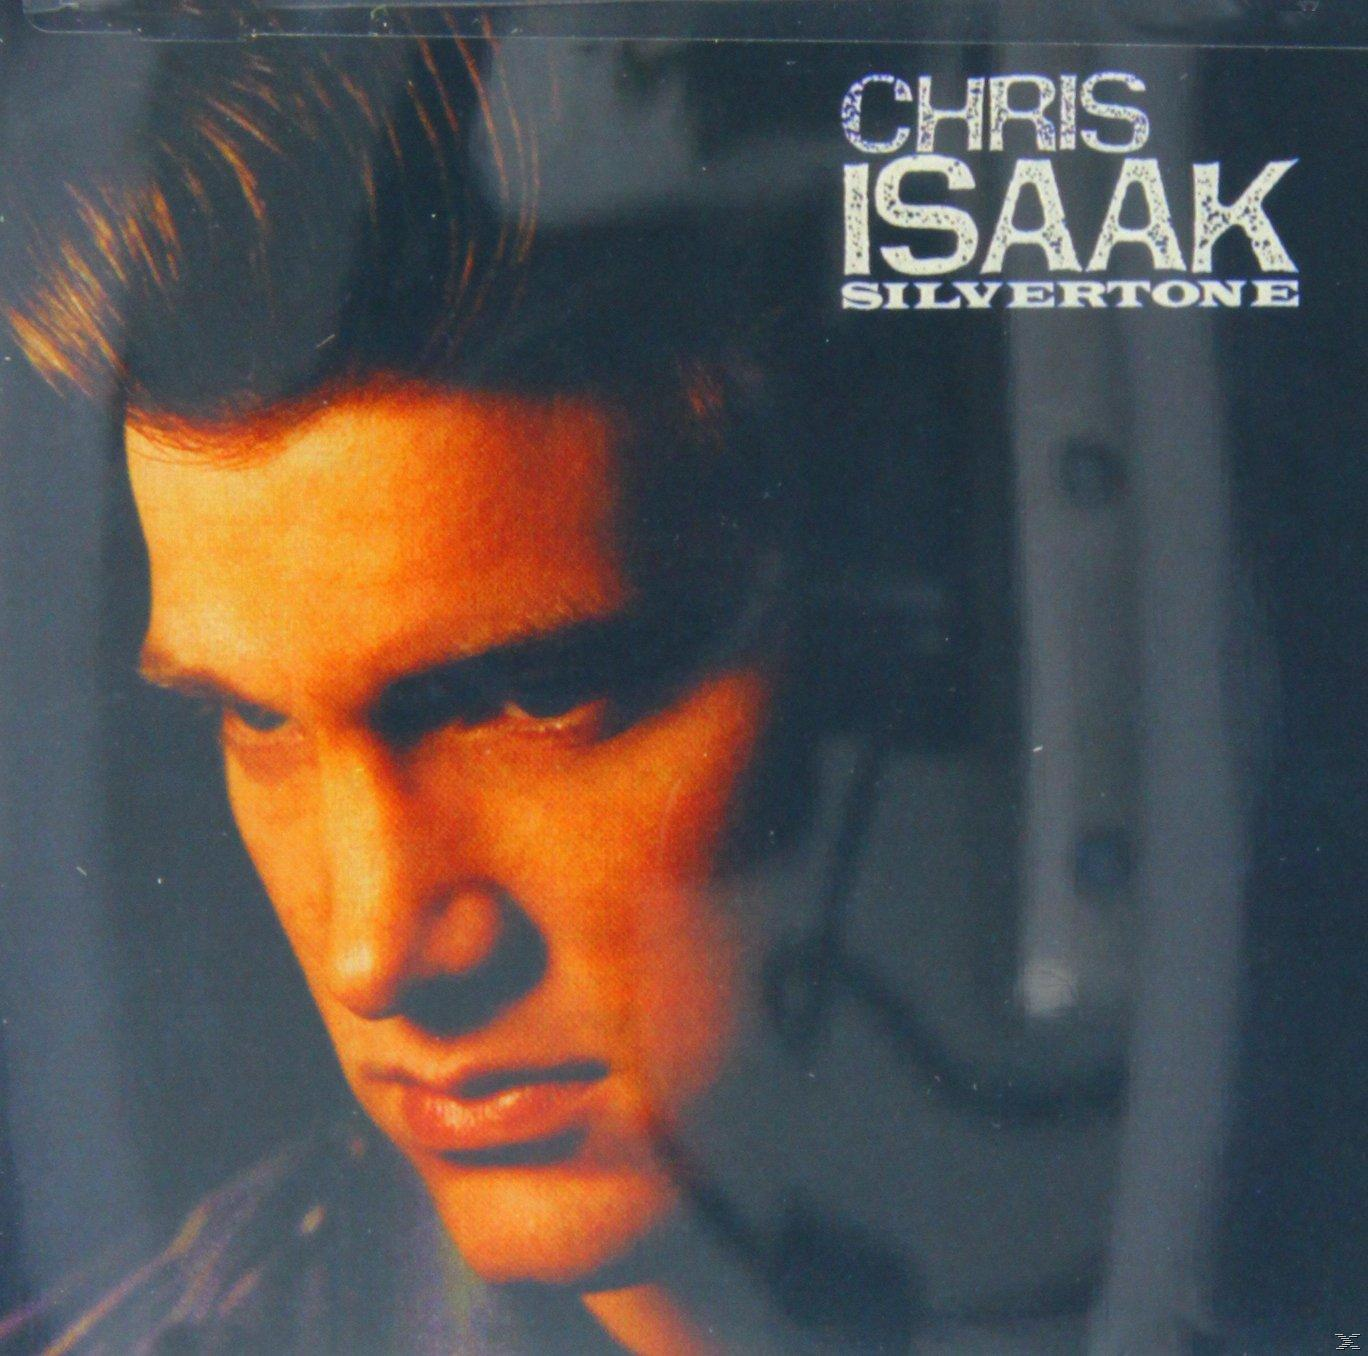 Chris - Isaak (CD) Silvertone -